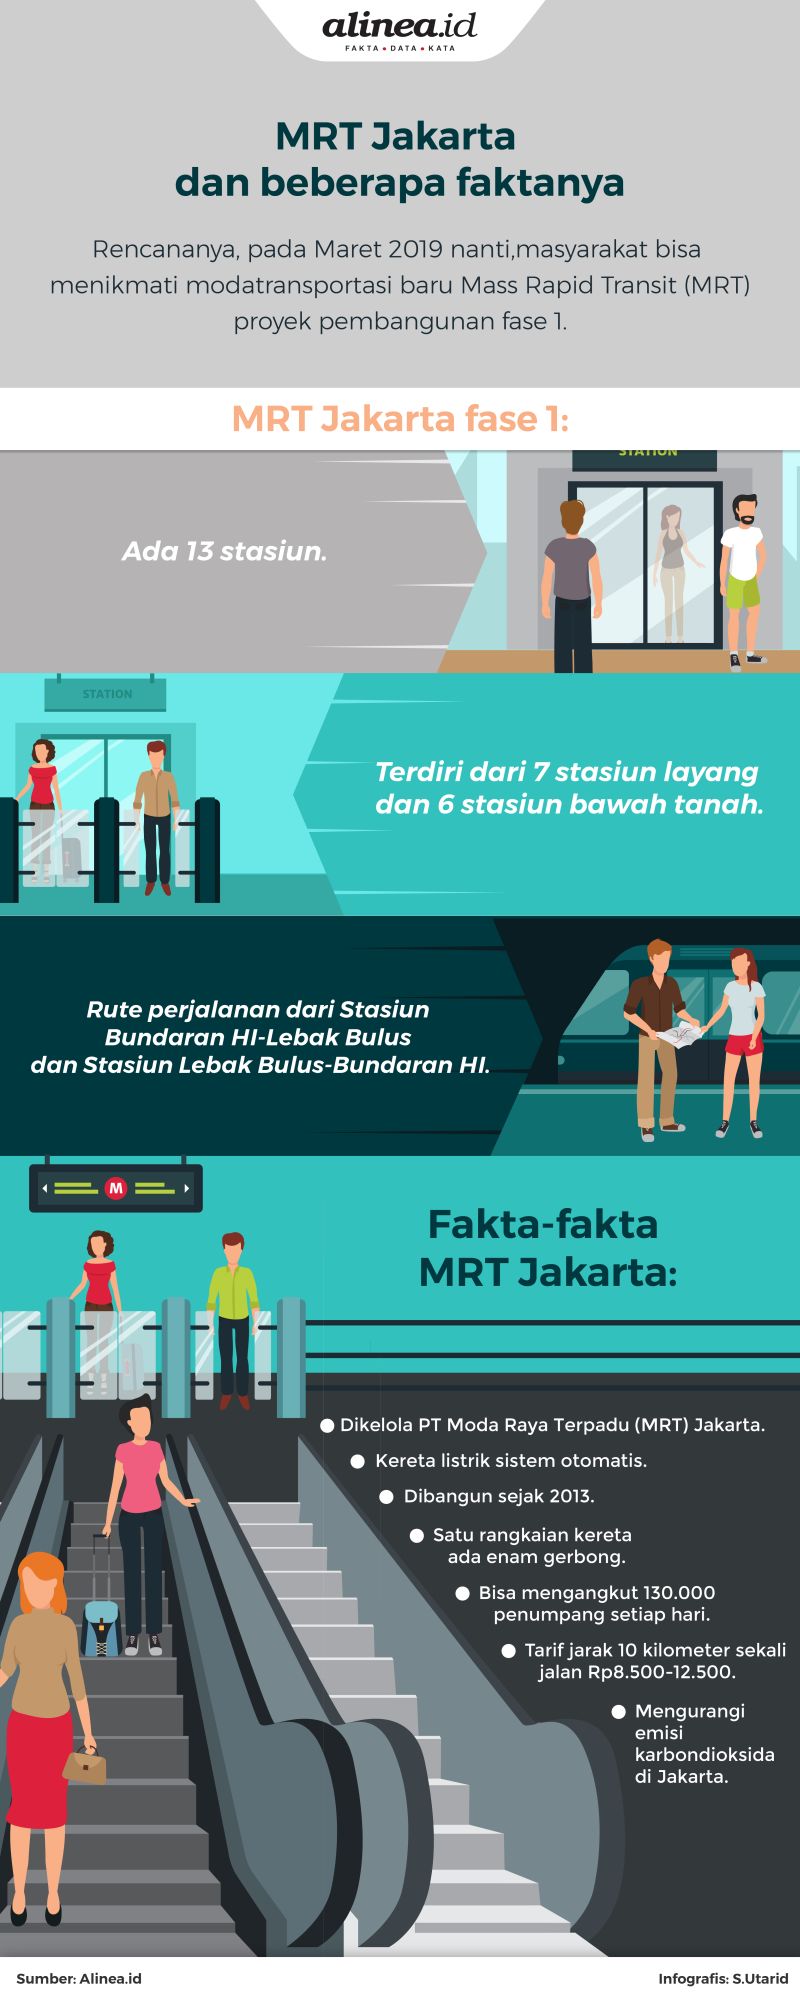 Proyek MRT Jakarta dimulai sejak 2013.